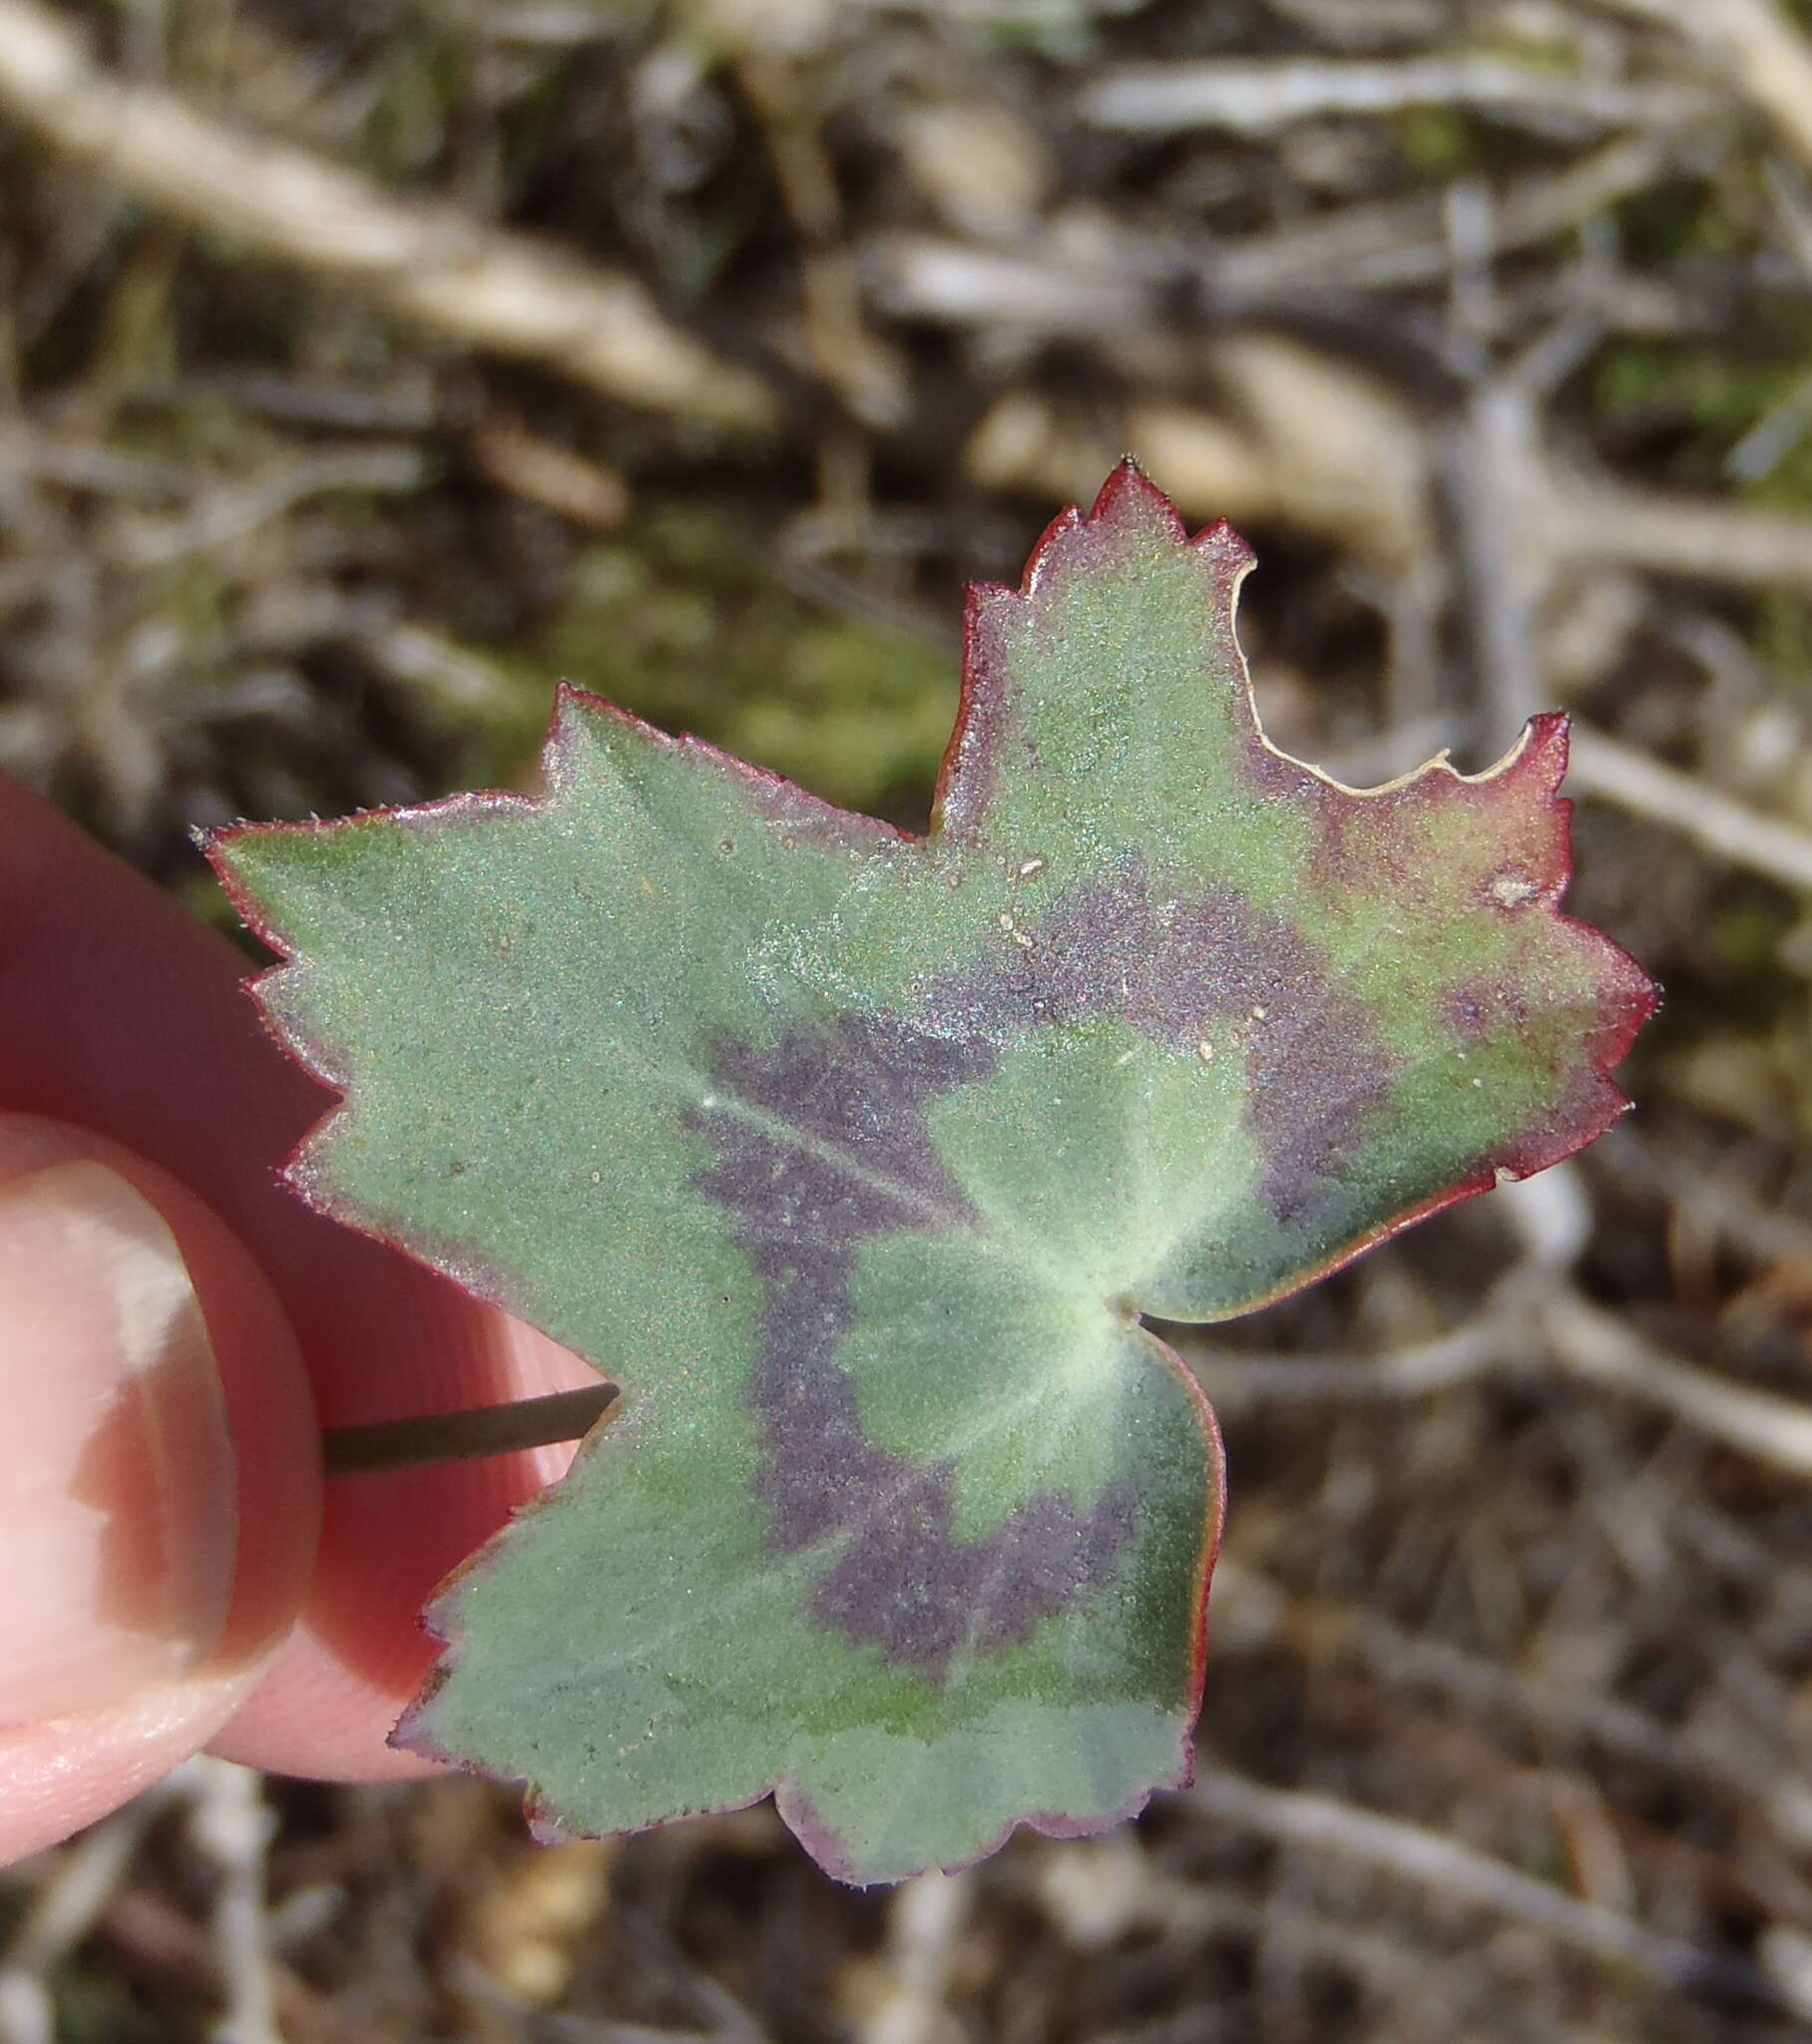 Image of Pelargonium tabulare (Burm. fil.) L'Her.